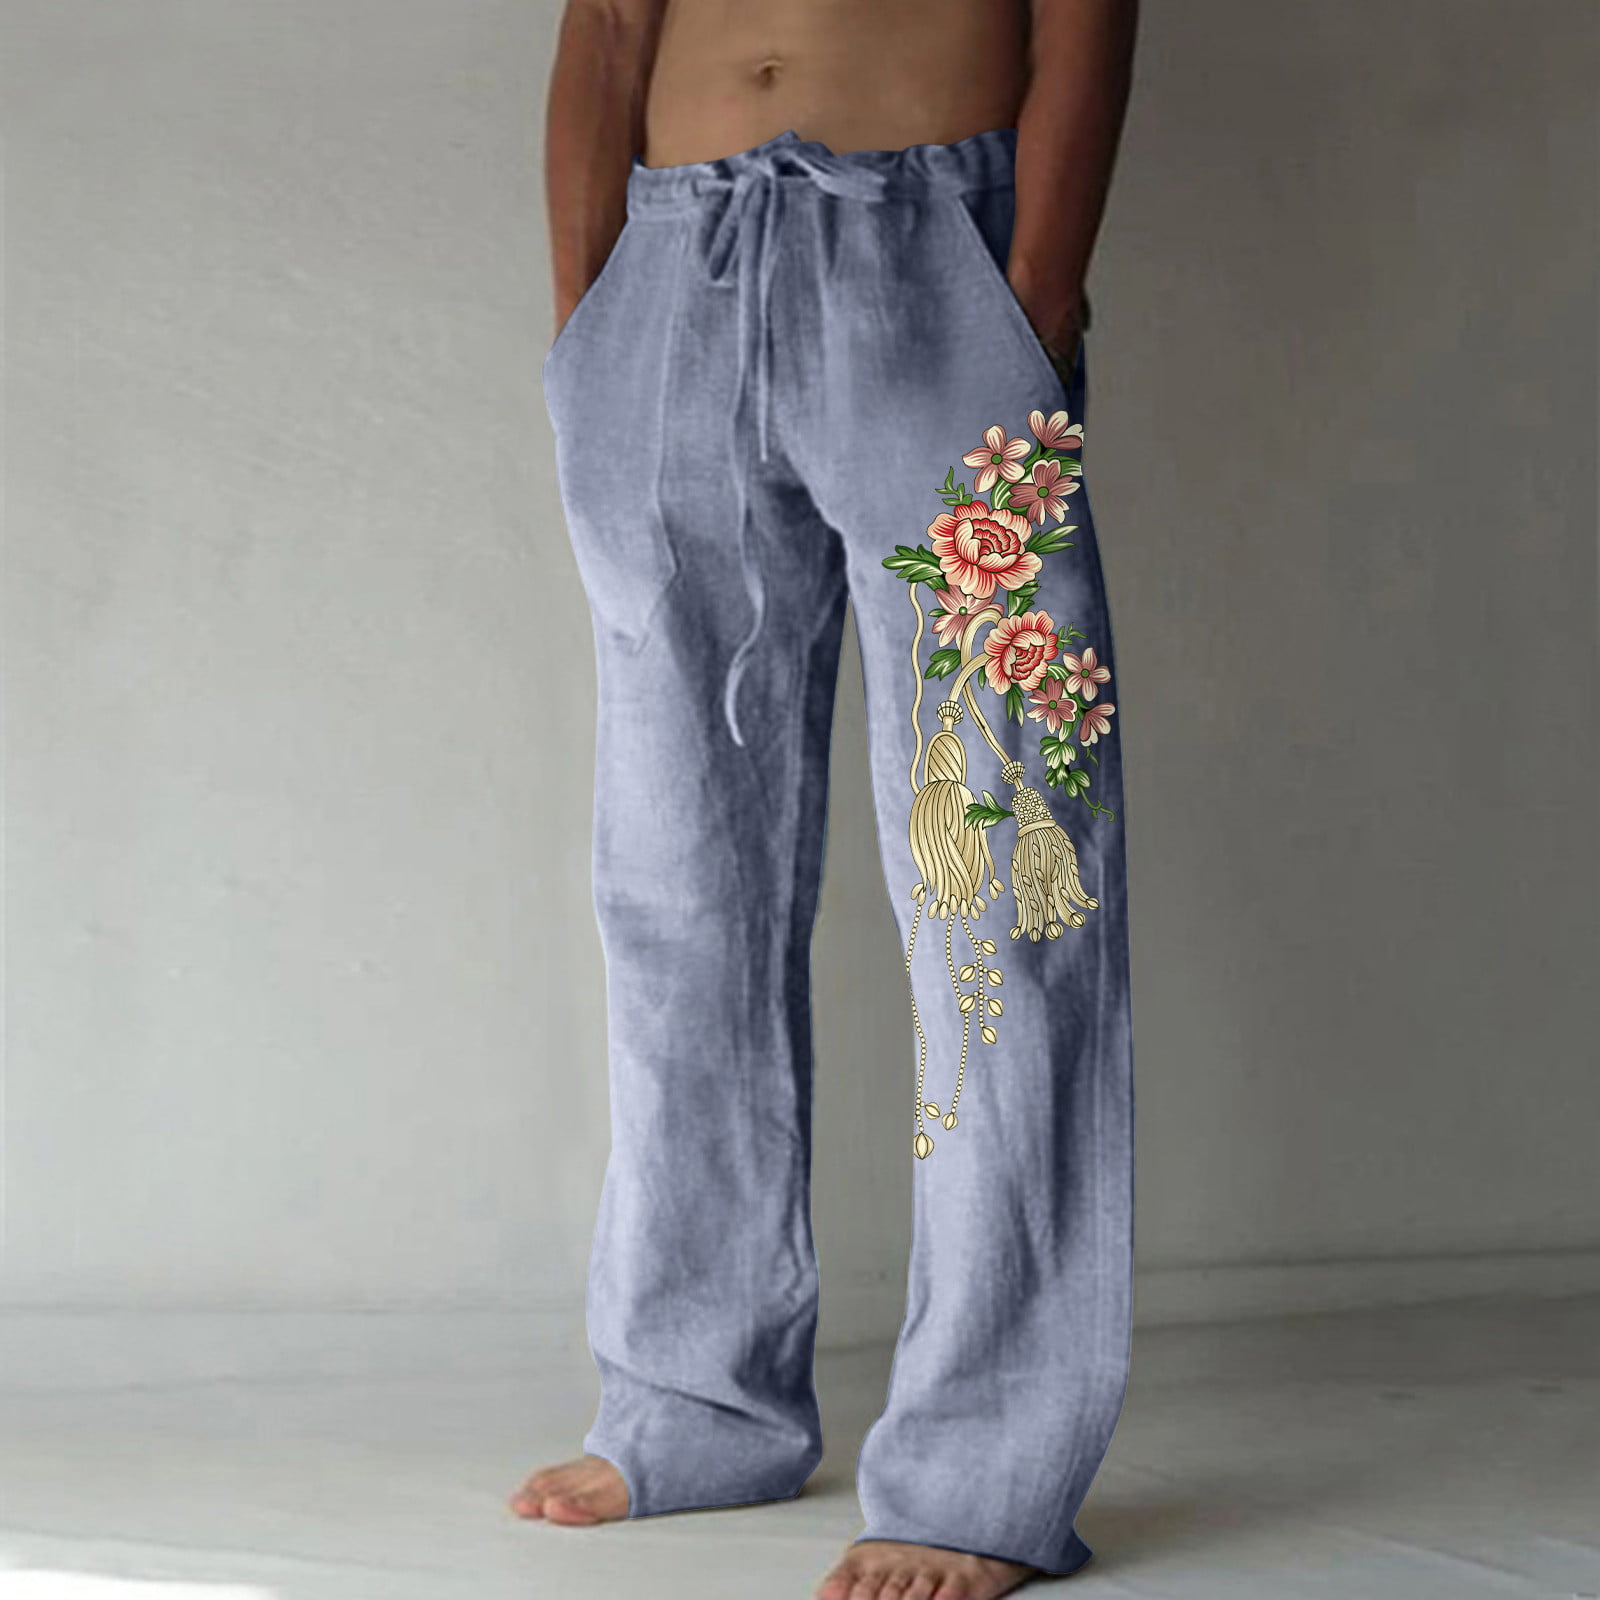 B91xZ Men's Sweatpants Mens Fashion Casual Interesting Cotton And Printed  Pocket Lace Up Pants Large Size Pants Beige,Size XL 